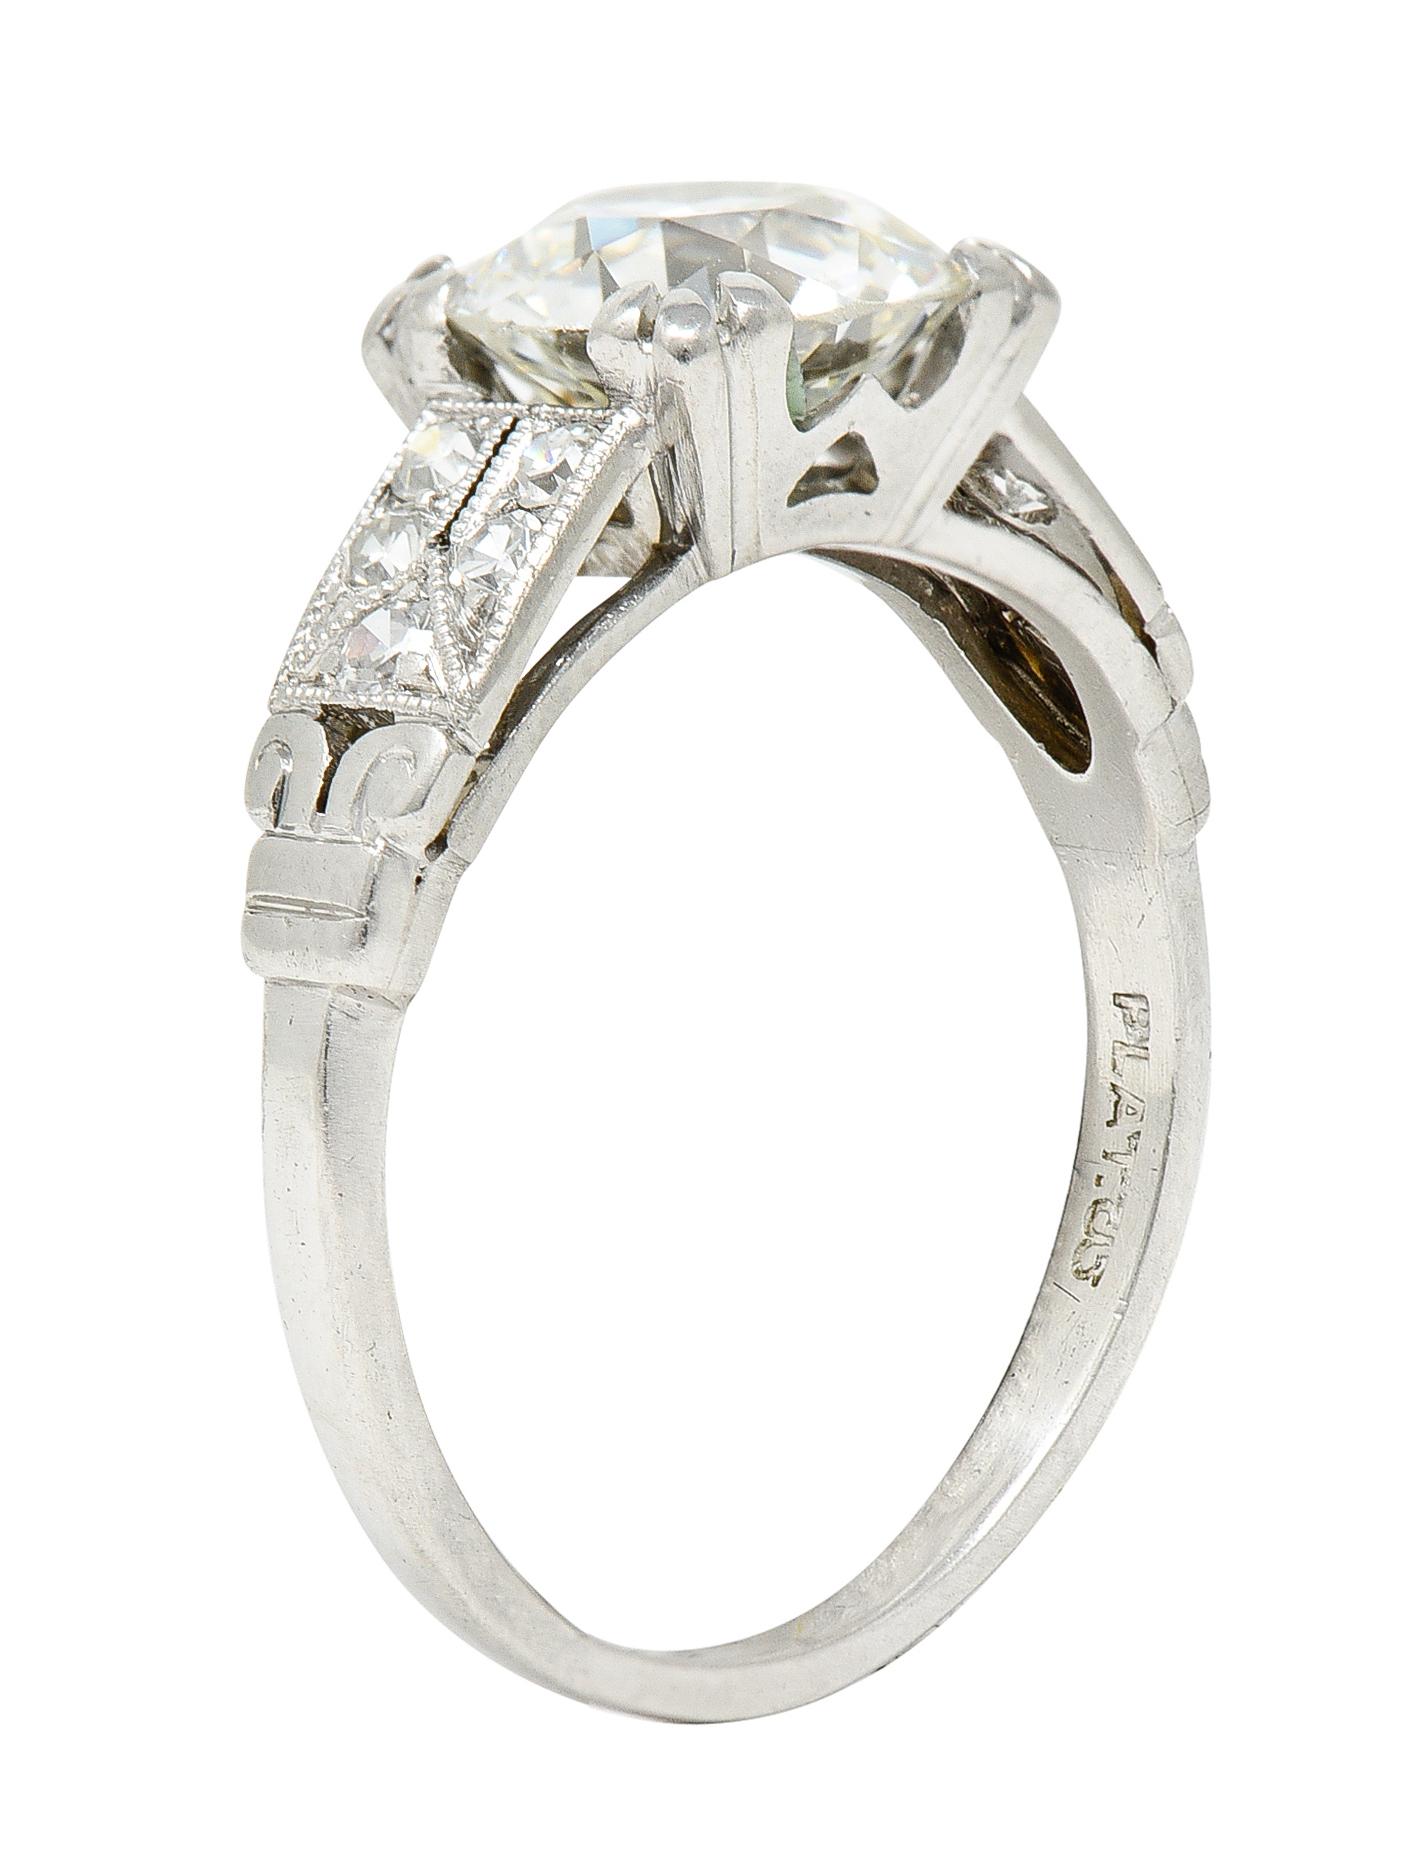 1930's Art Deco Old European 1.84 Carats Diamond Platinum Engagement Ring For Sale 6